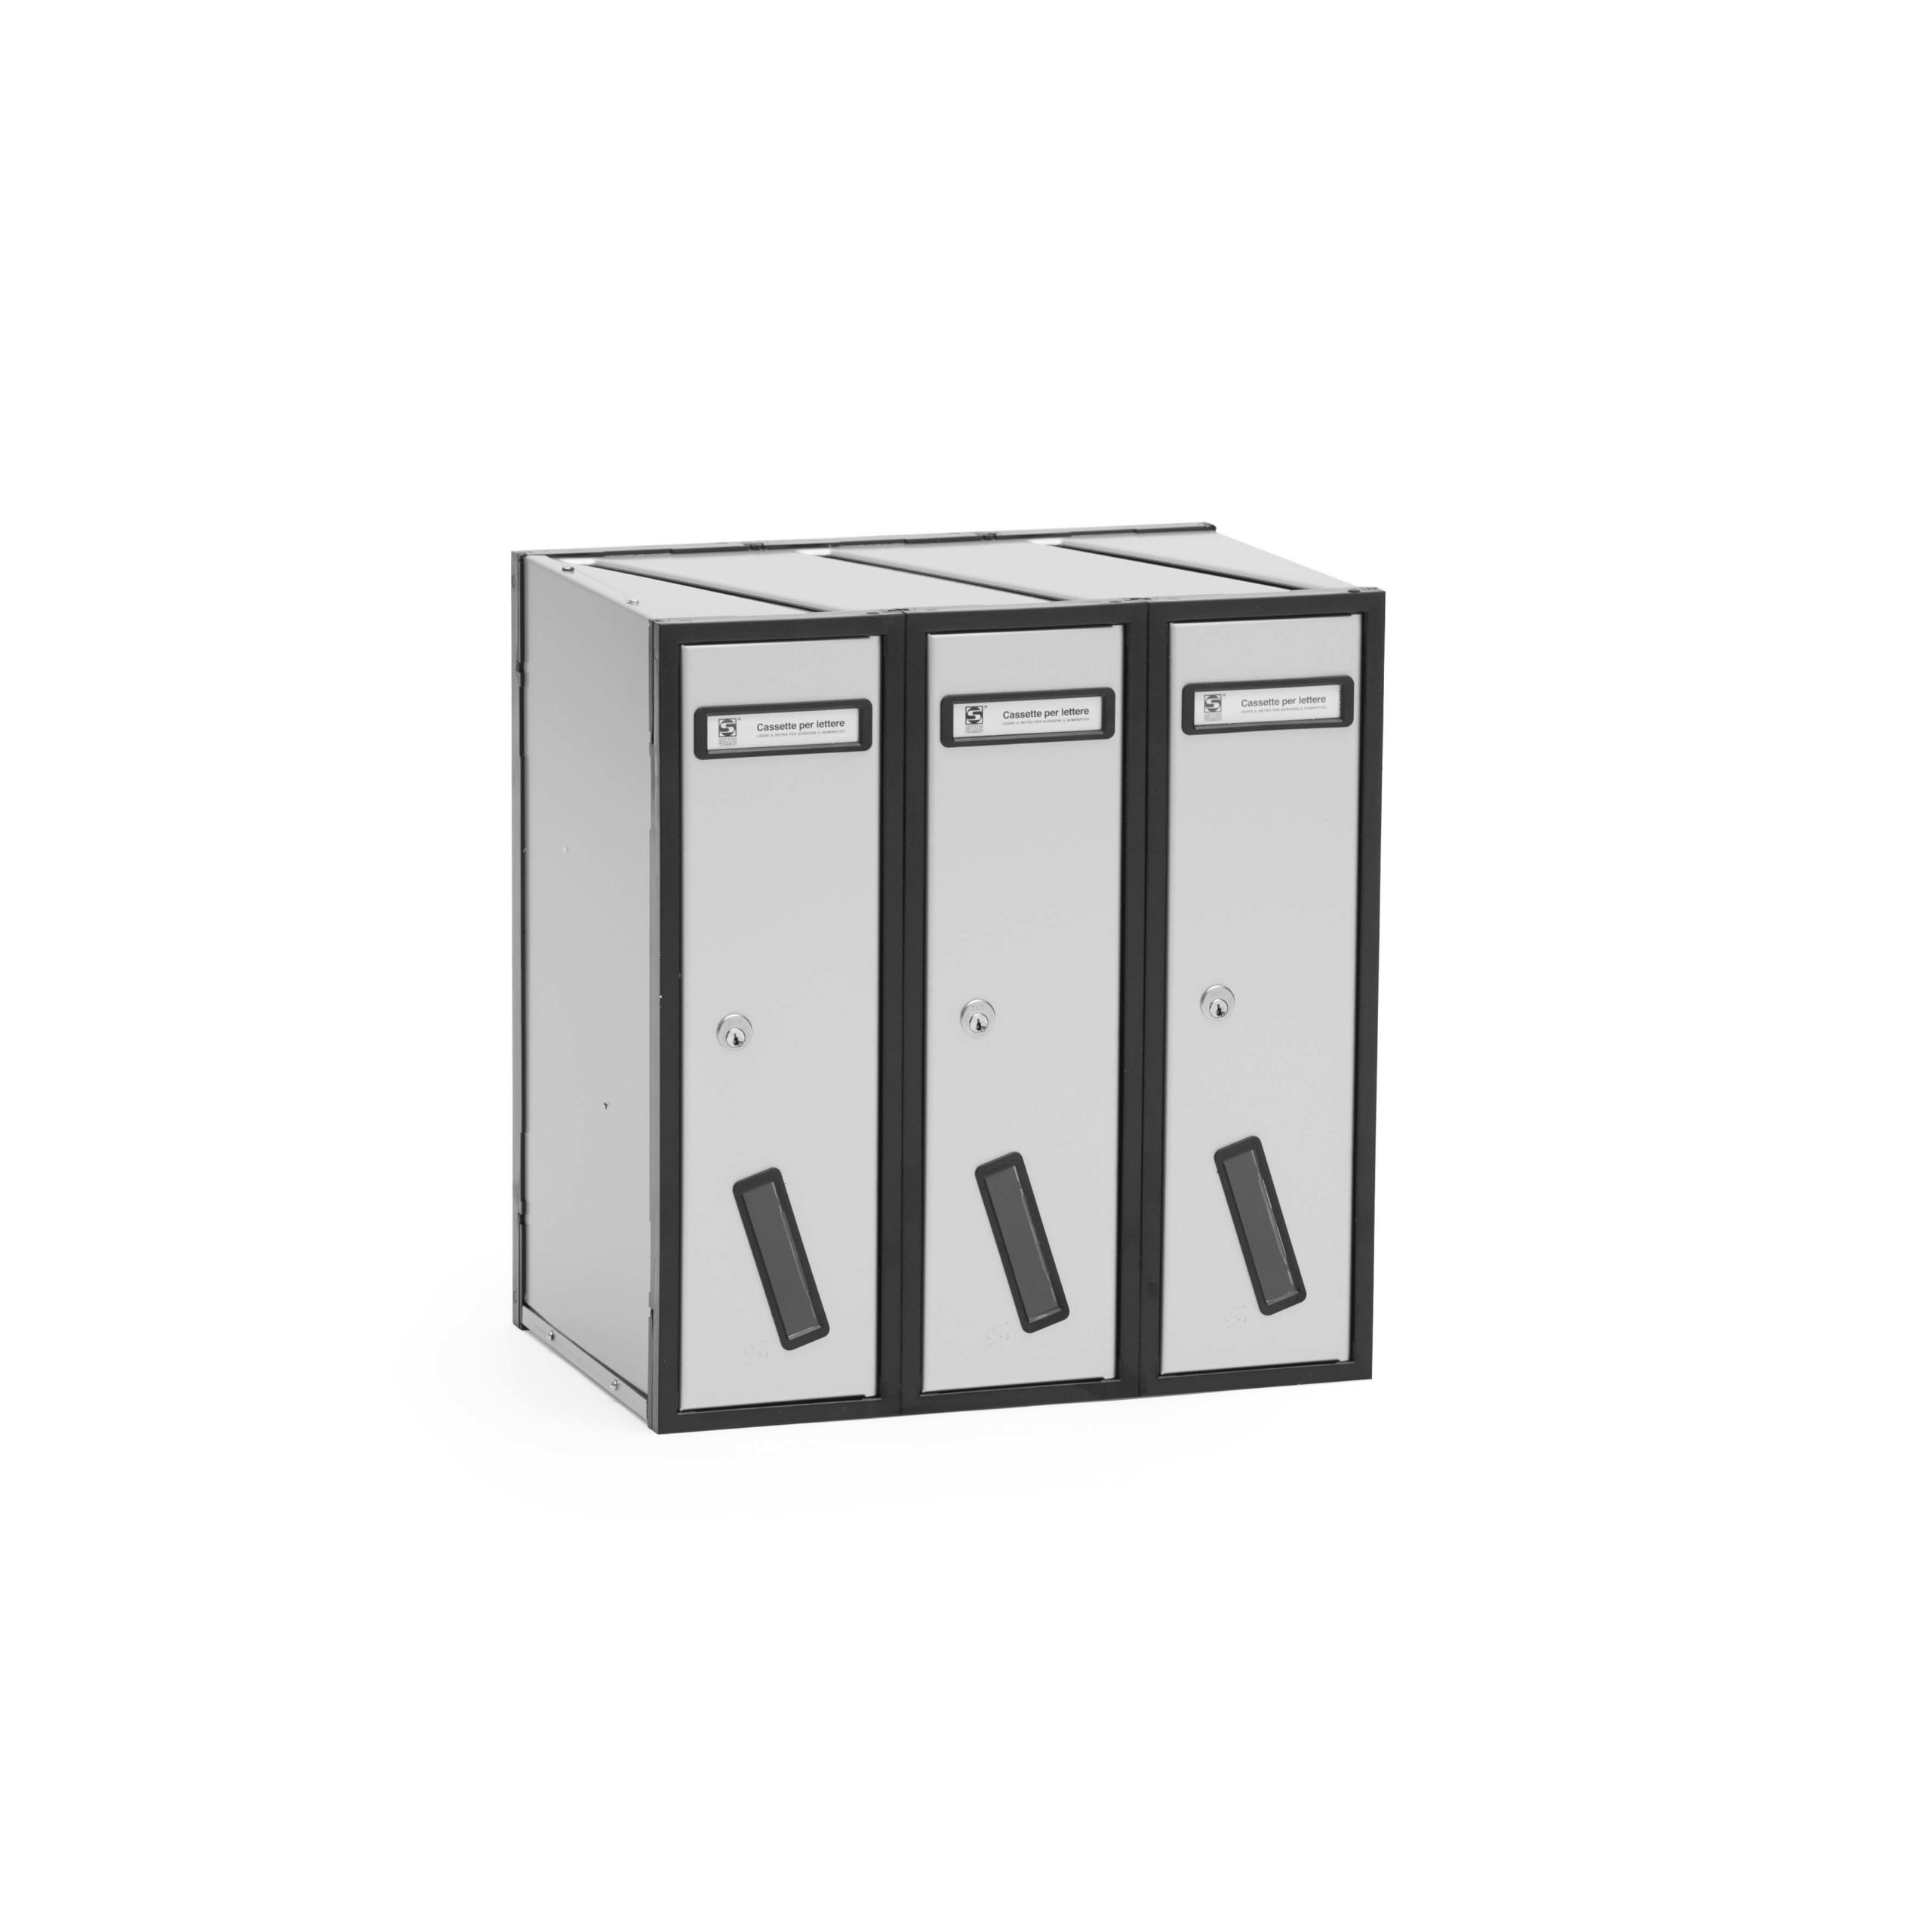 Standard modular letterbox units SC5V - 3 letterboxes